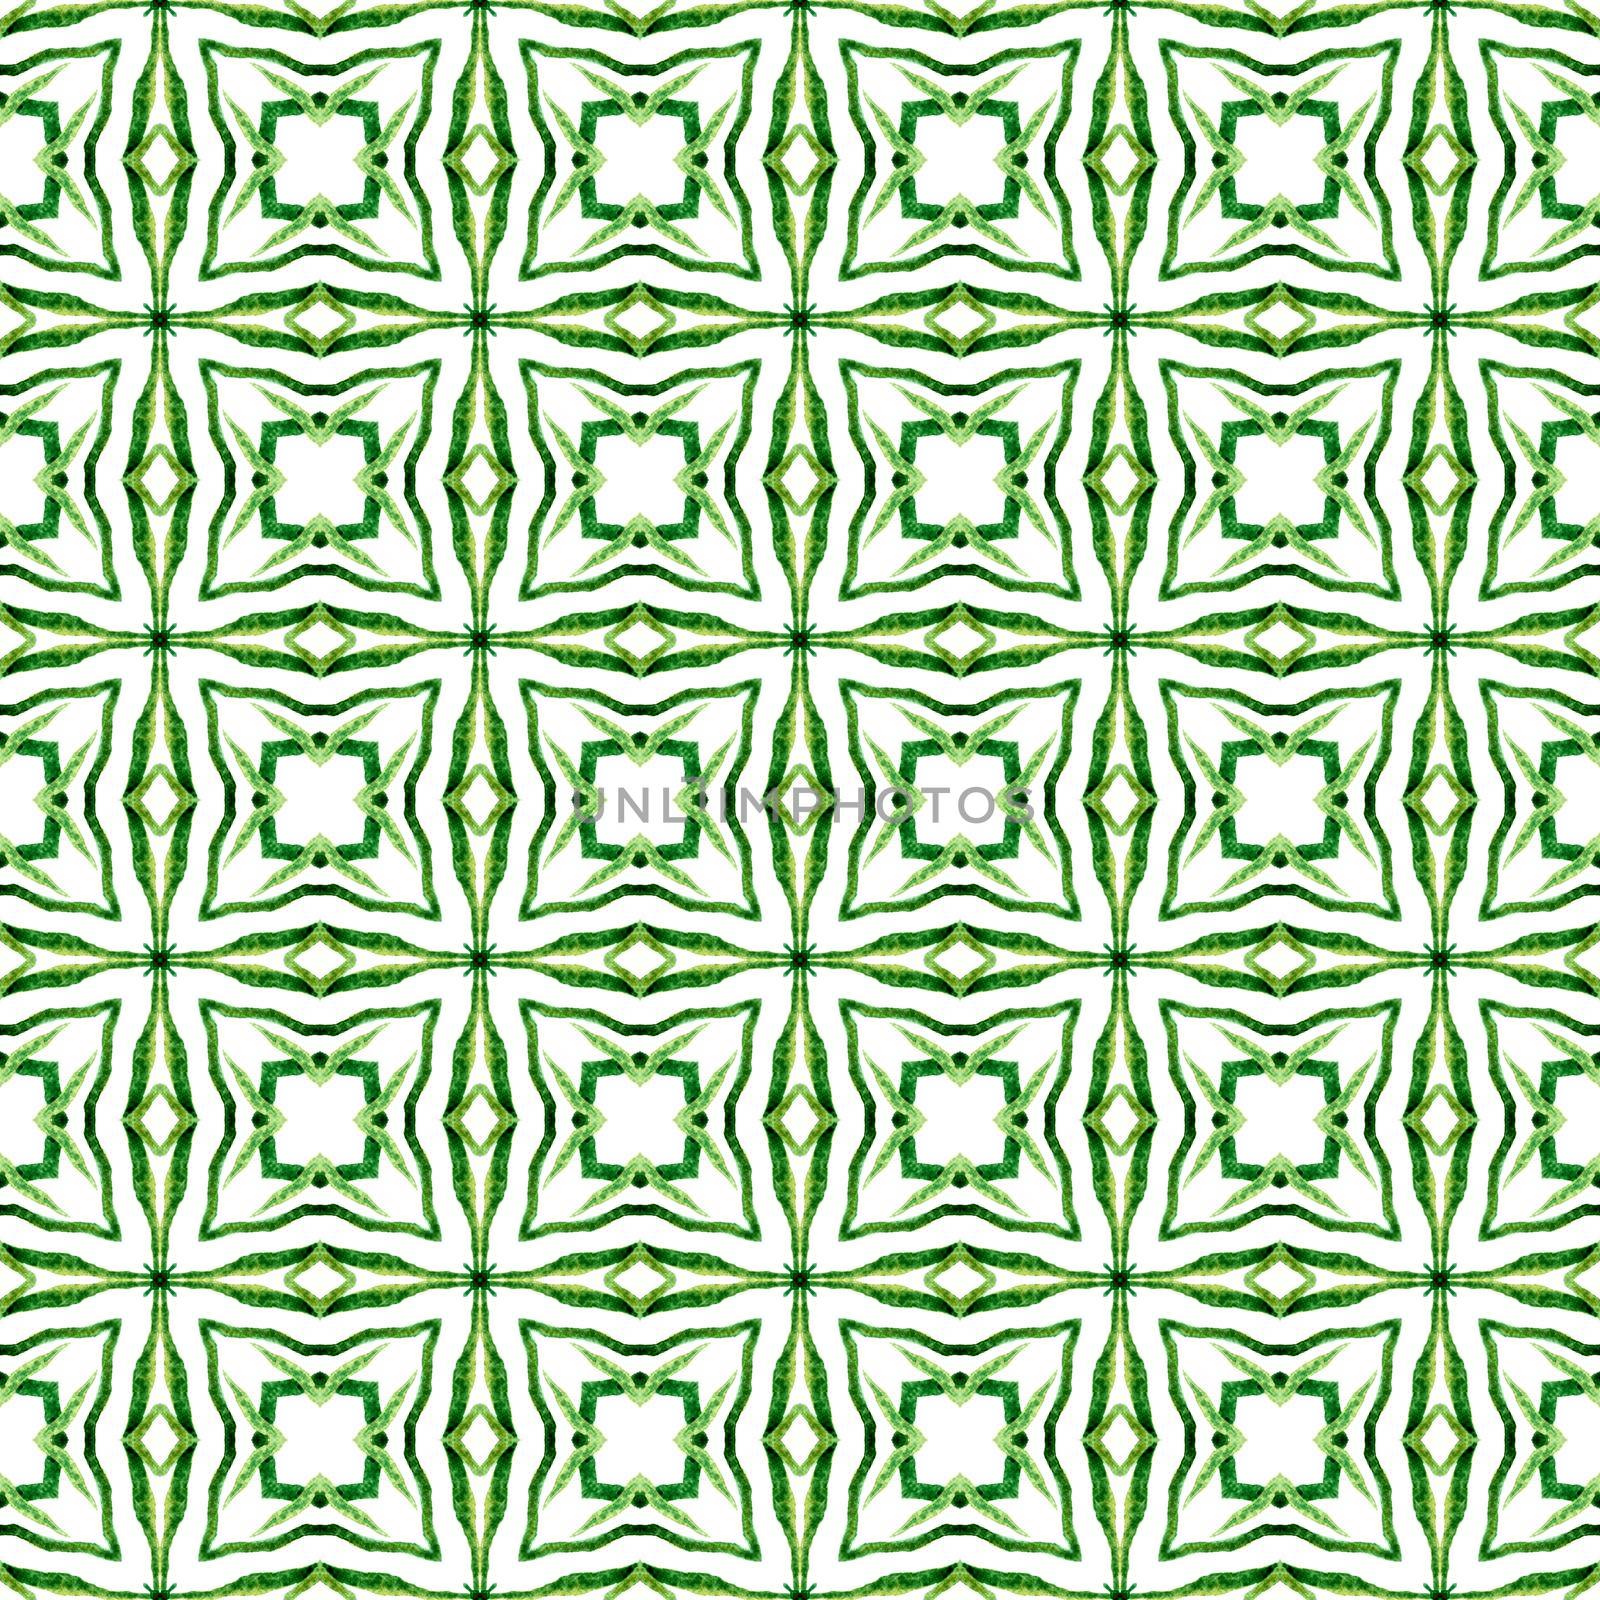 Oriental arabesque hand drawn border. Green glamorous boho chic summer design. Arabesque hand drawn design. Textile ready amazing print, swimwear fabric, wallpaper, wrapping.